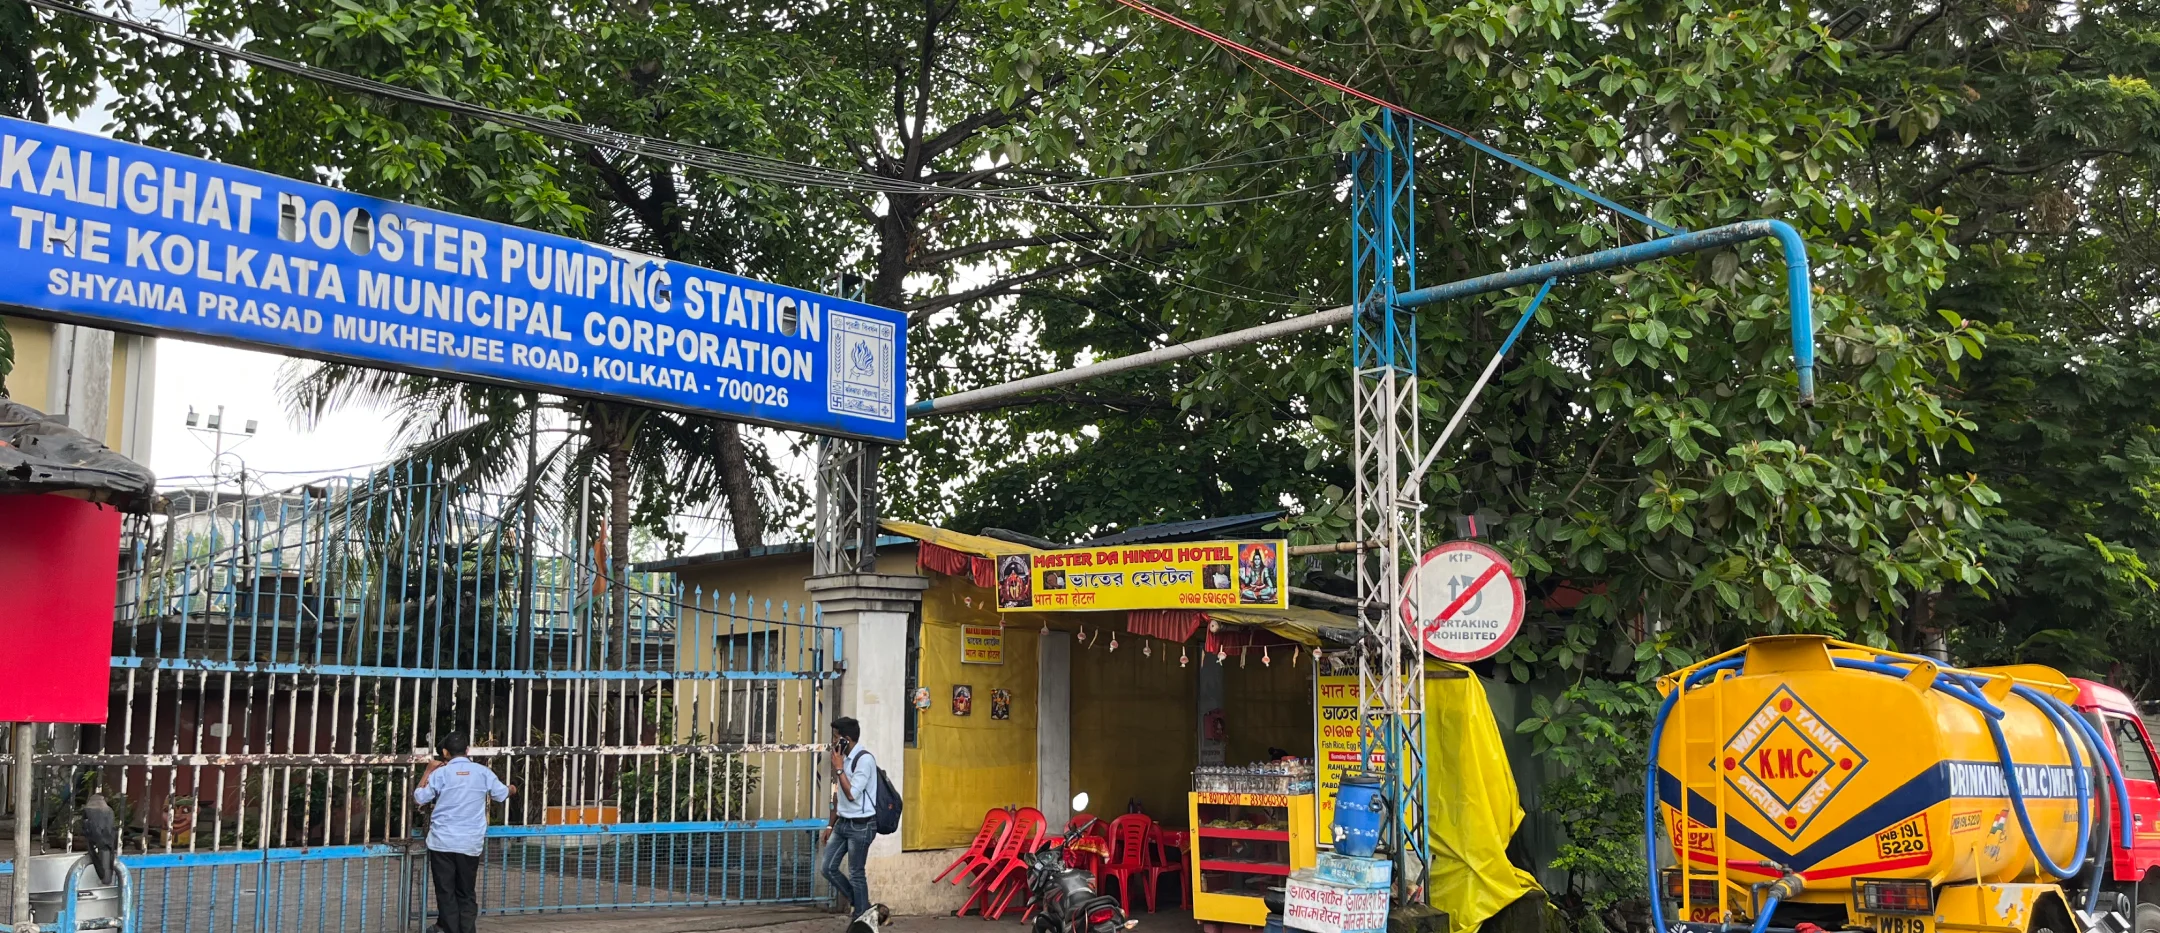 Kolkata’s Water Distribution System